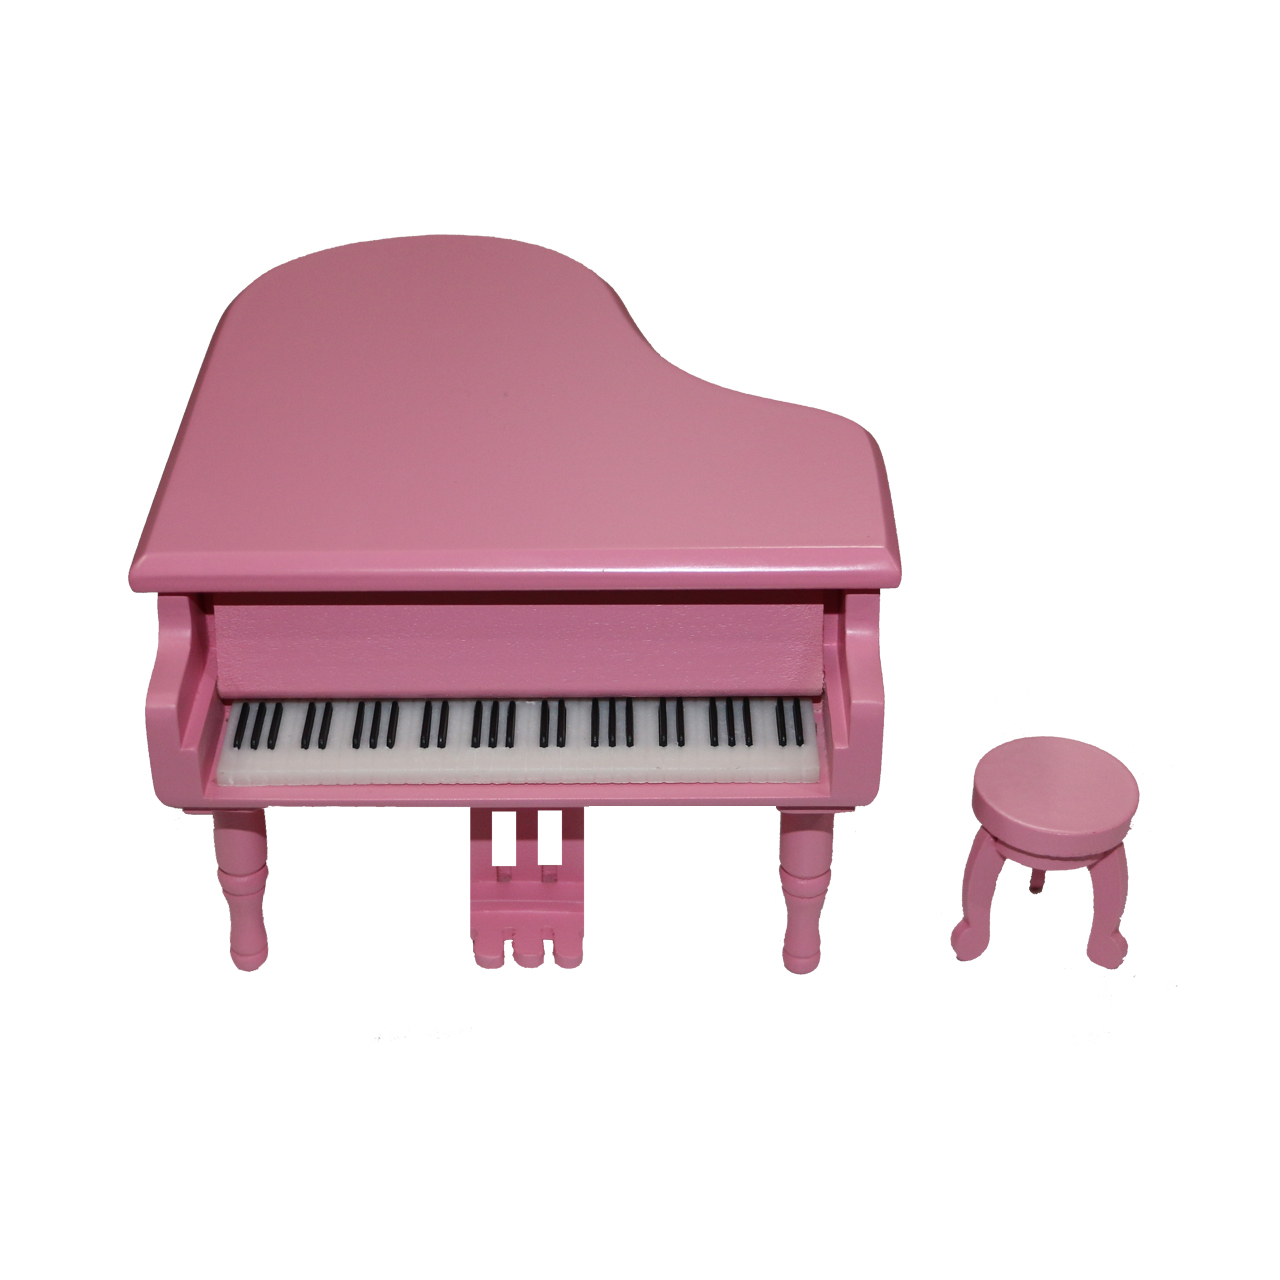 ماکت موزیکال طرح پیانو مدل As68